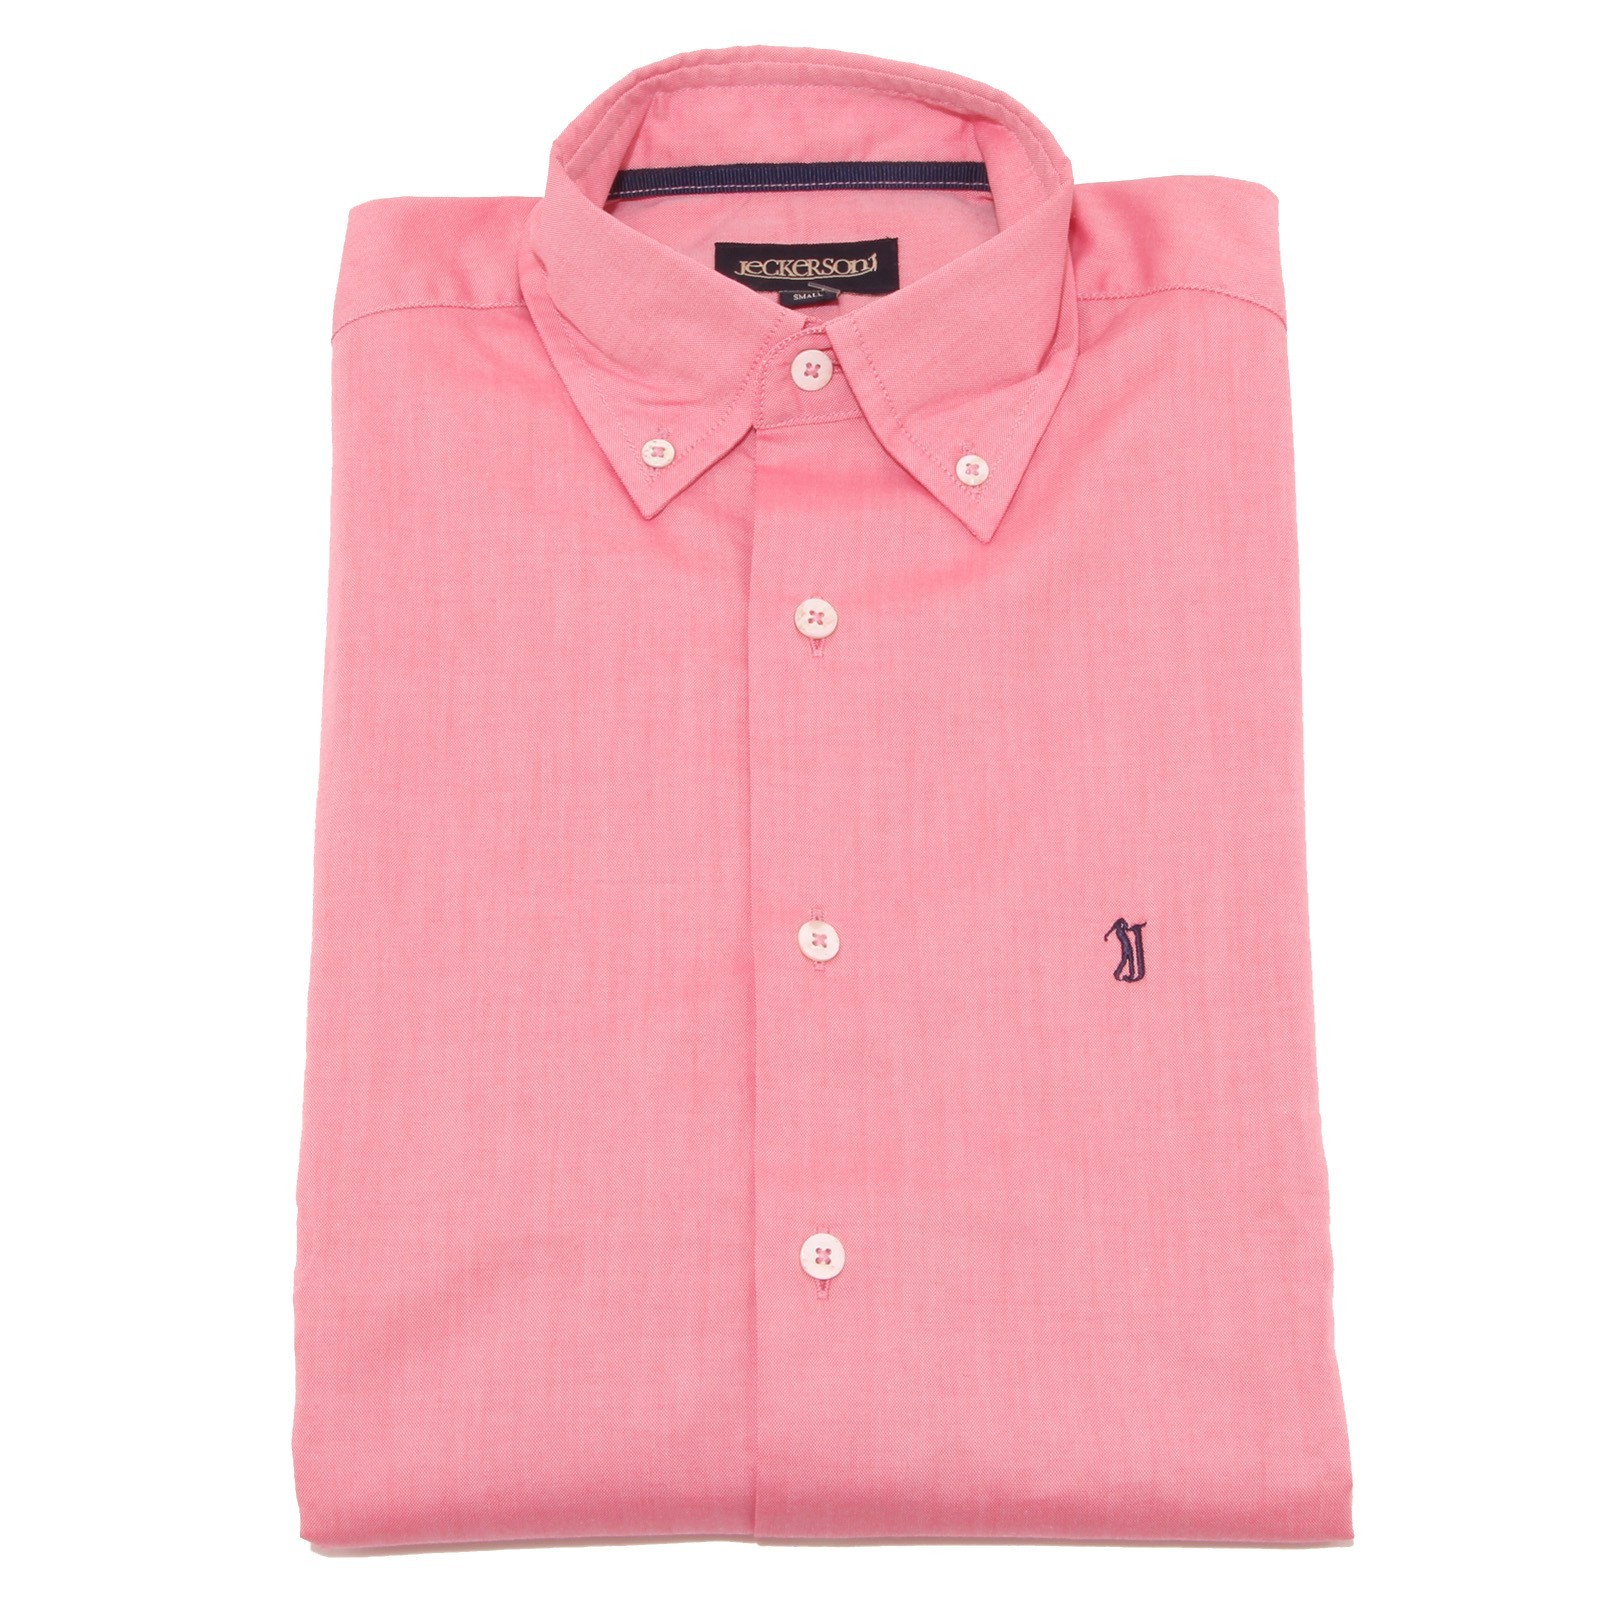 ONLY & SONS Camicia Rosa XXL MODA UOMO Camicie & T-shirt Regular fit sconto 52% 